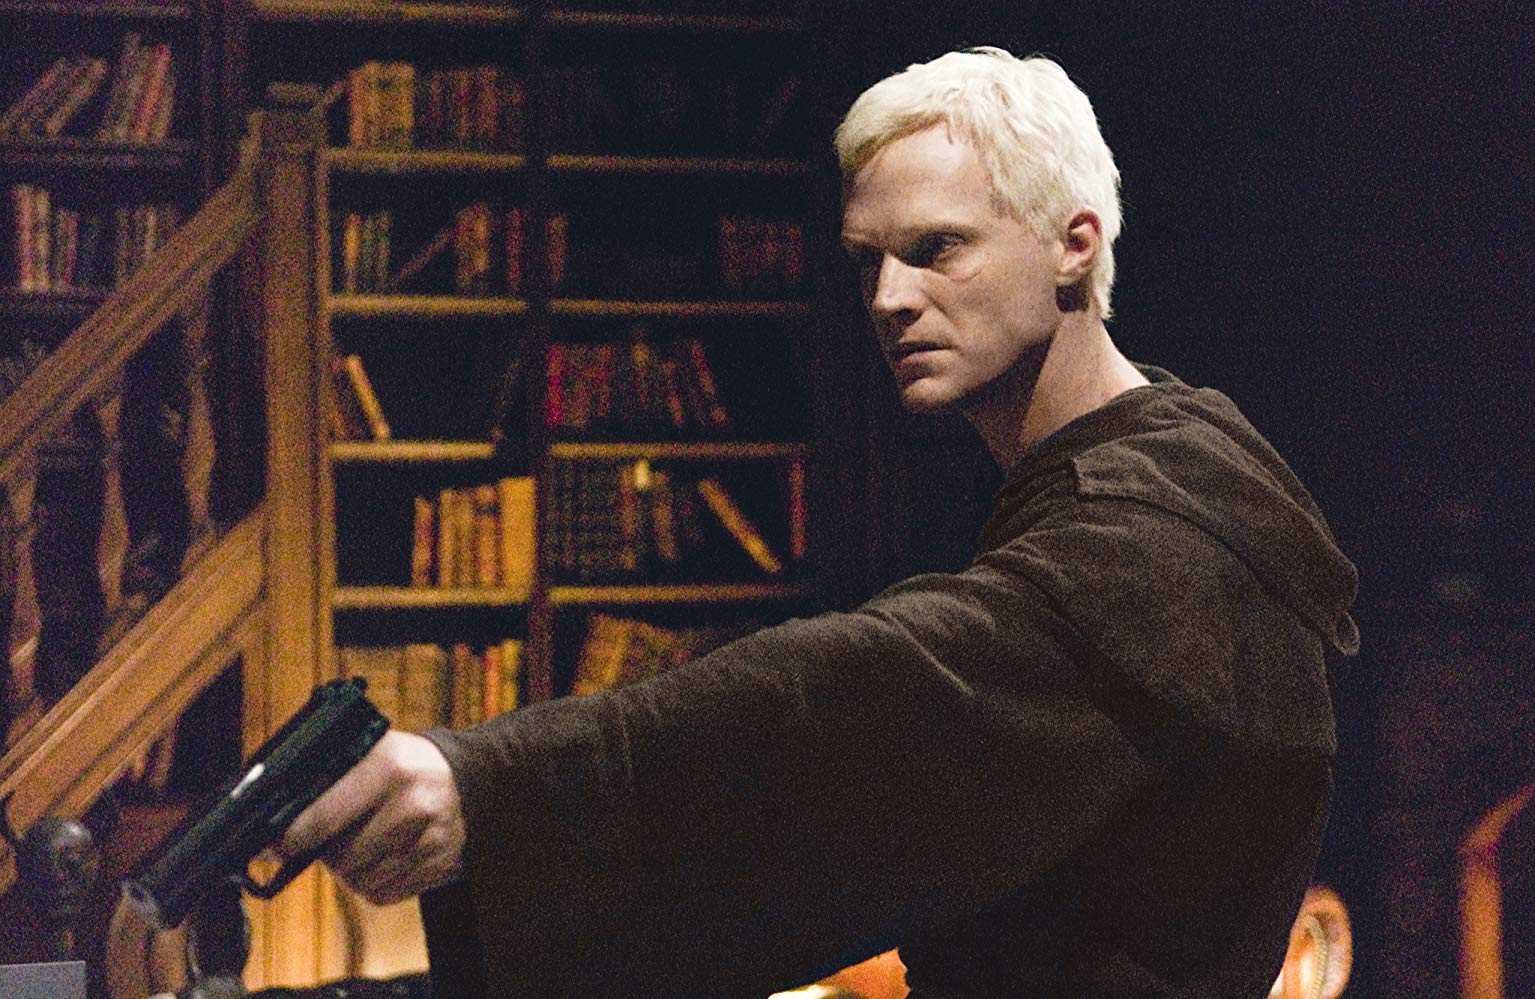 Paul Bettany as Silas in The Da Vinci Code (2006)